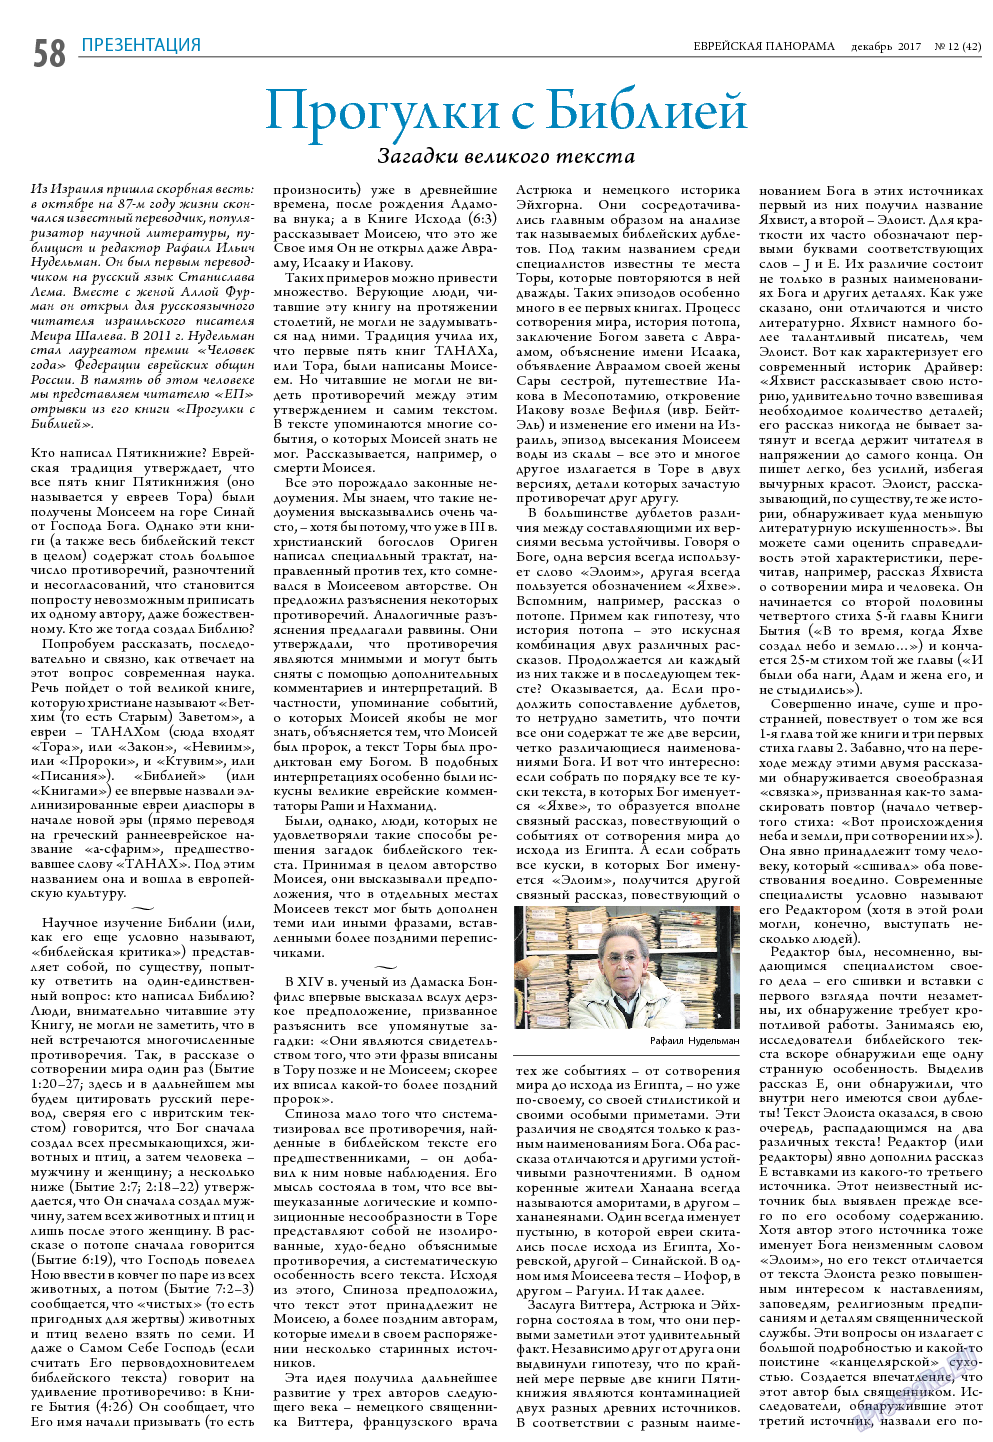 Еврейская панорама, газета. 2017 №12 стр.58